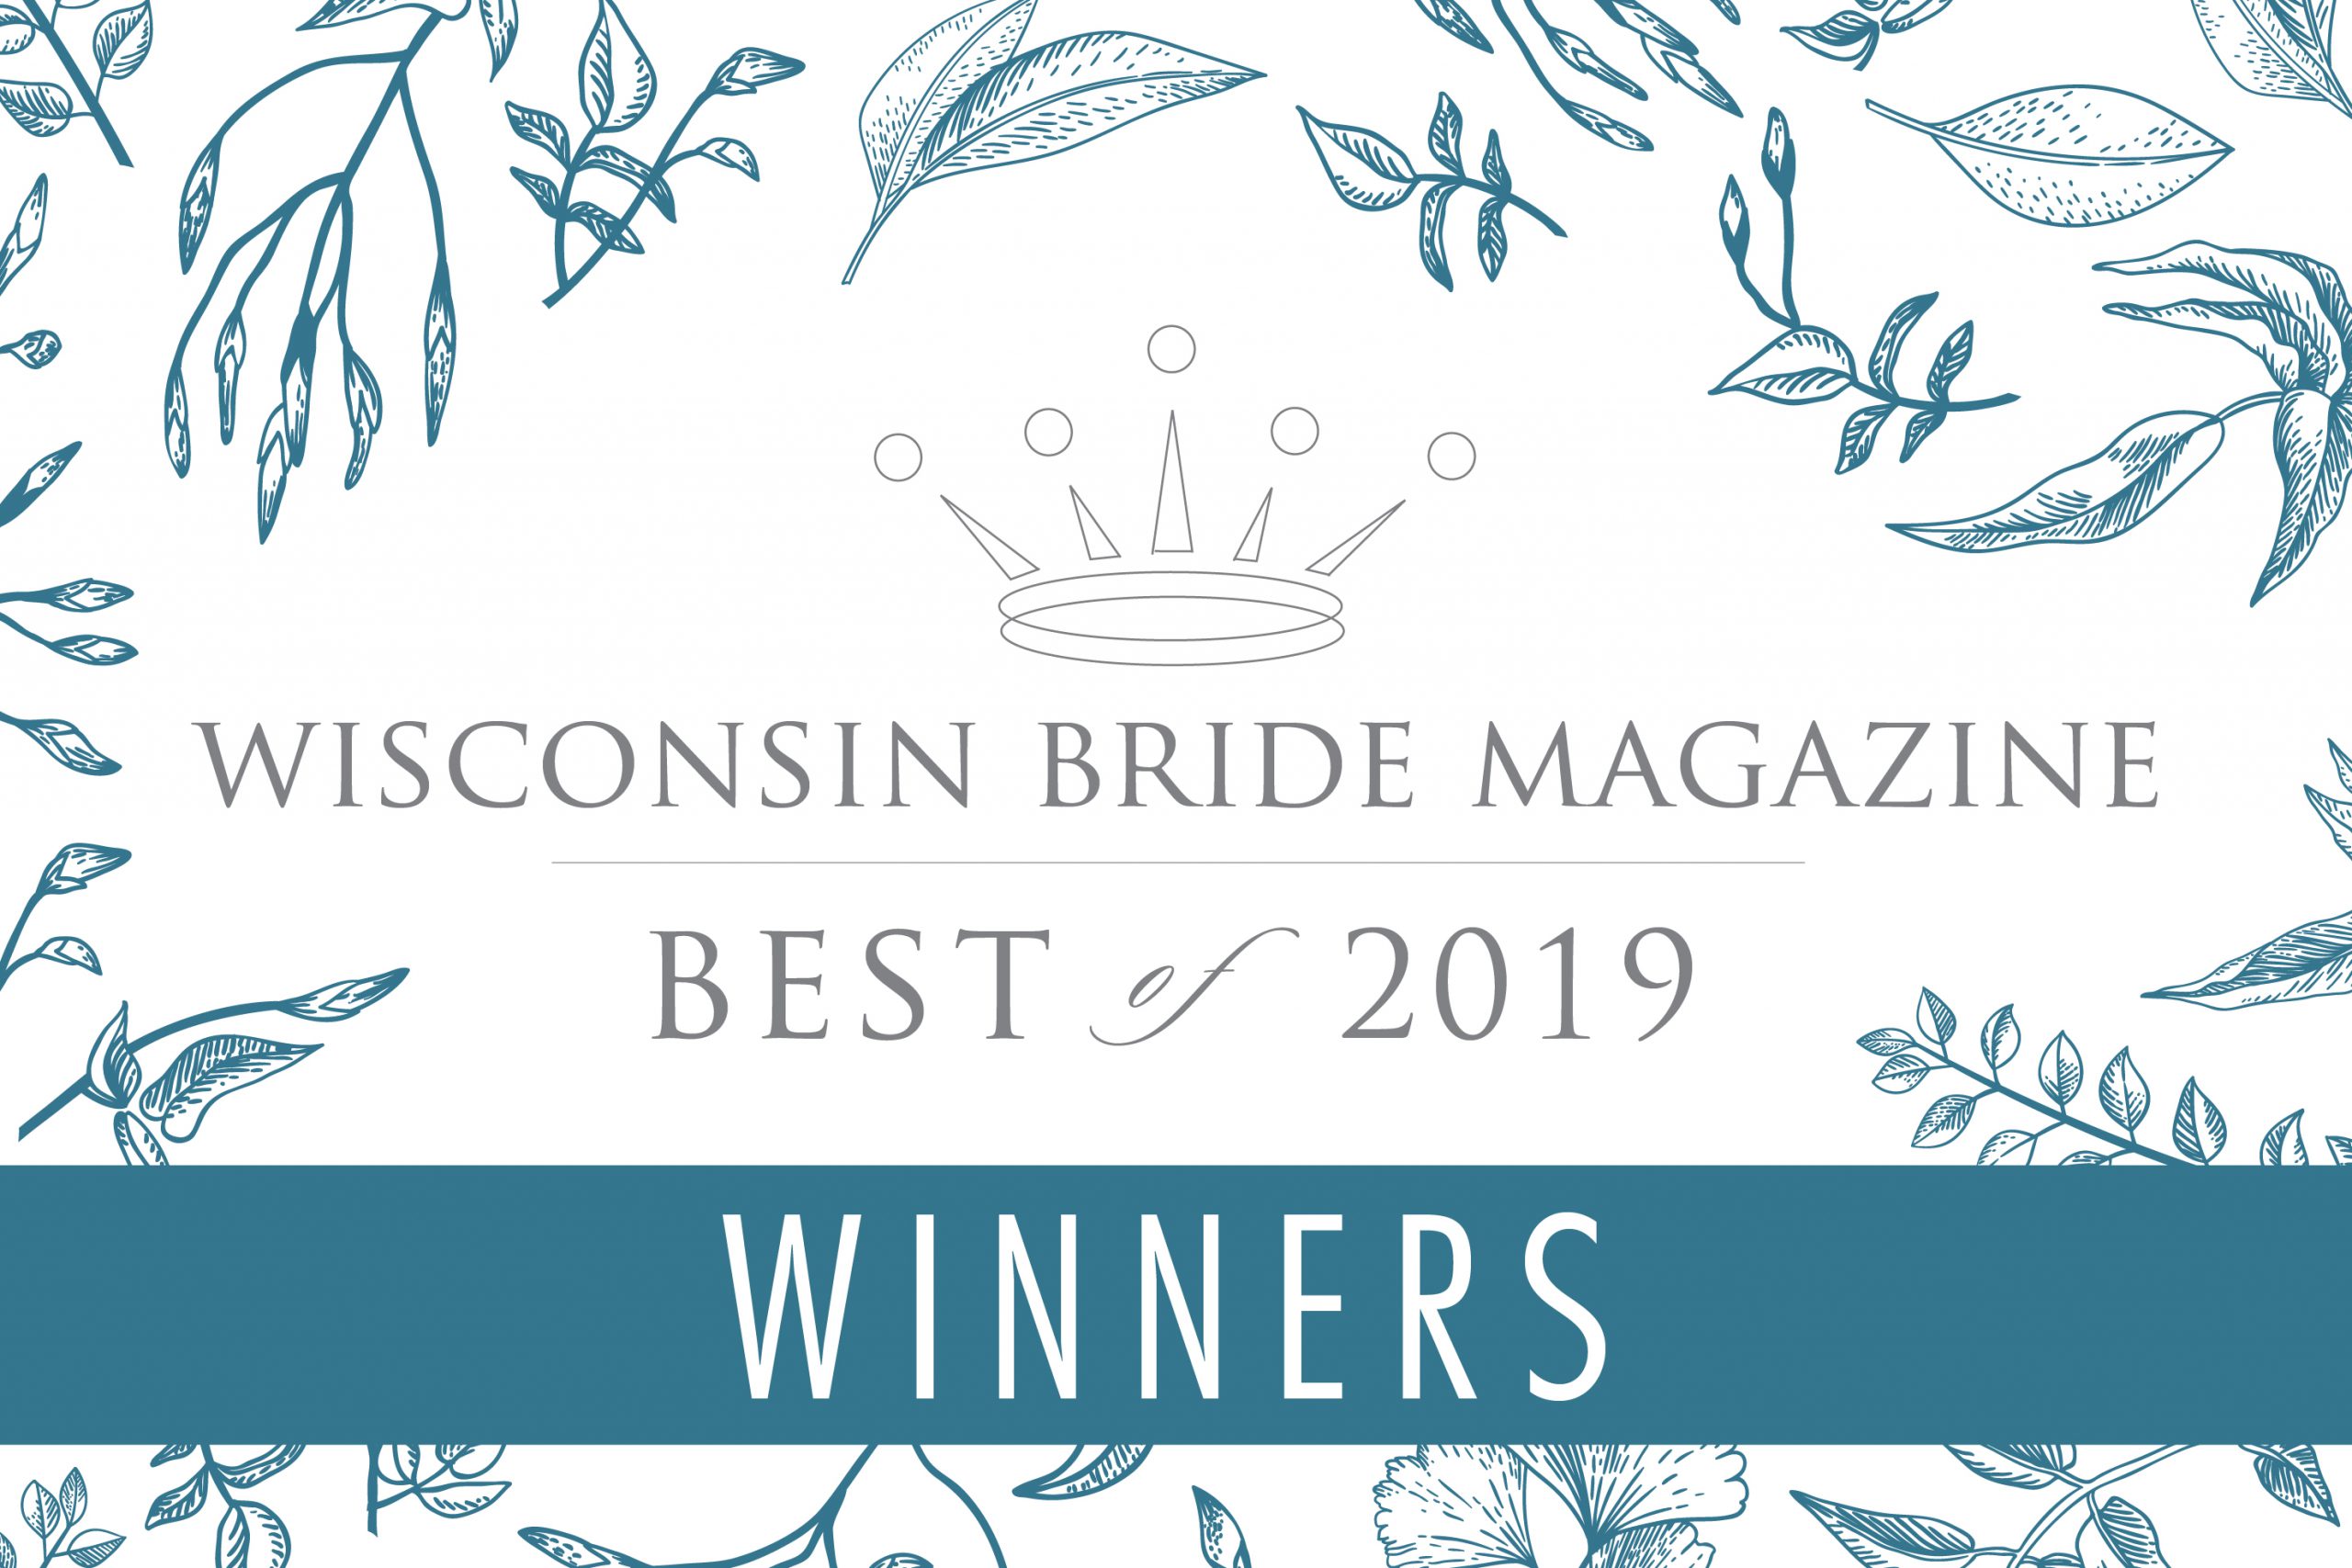 WINNER! Wisconsin Brides Best of 2019